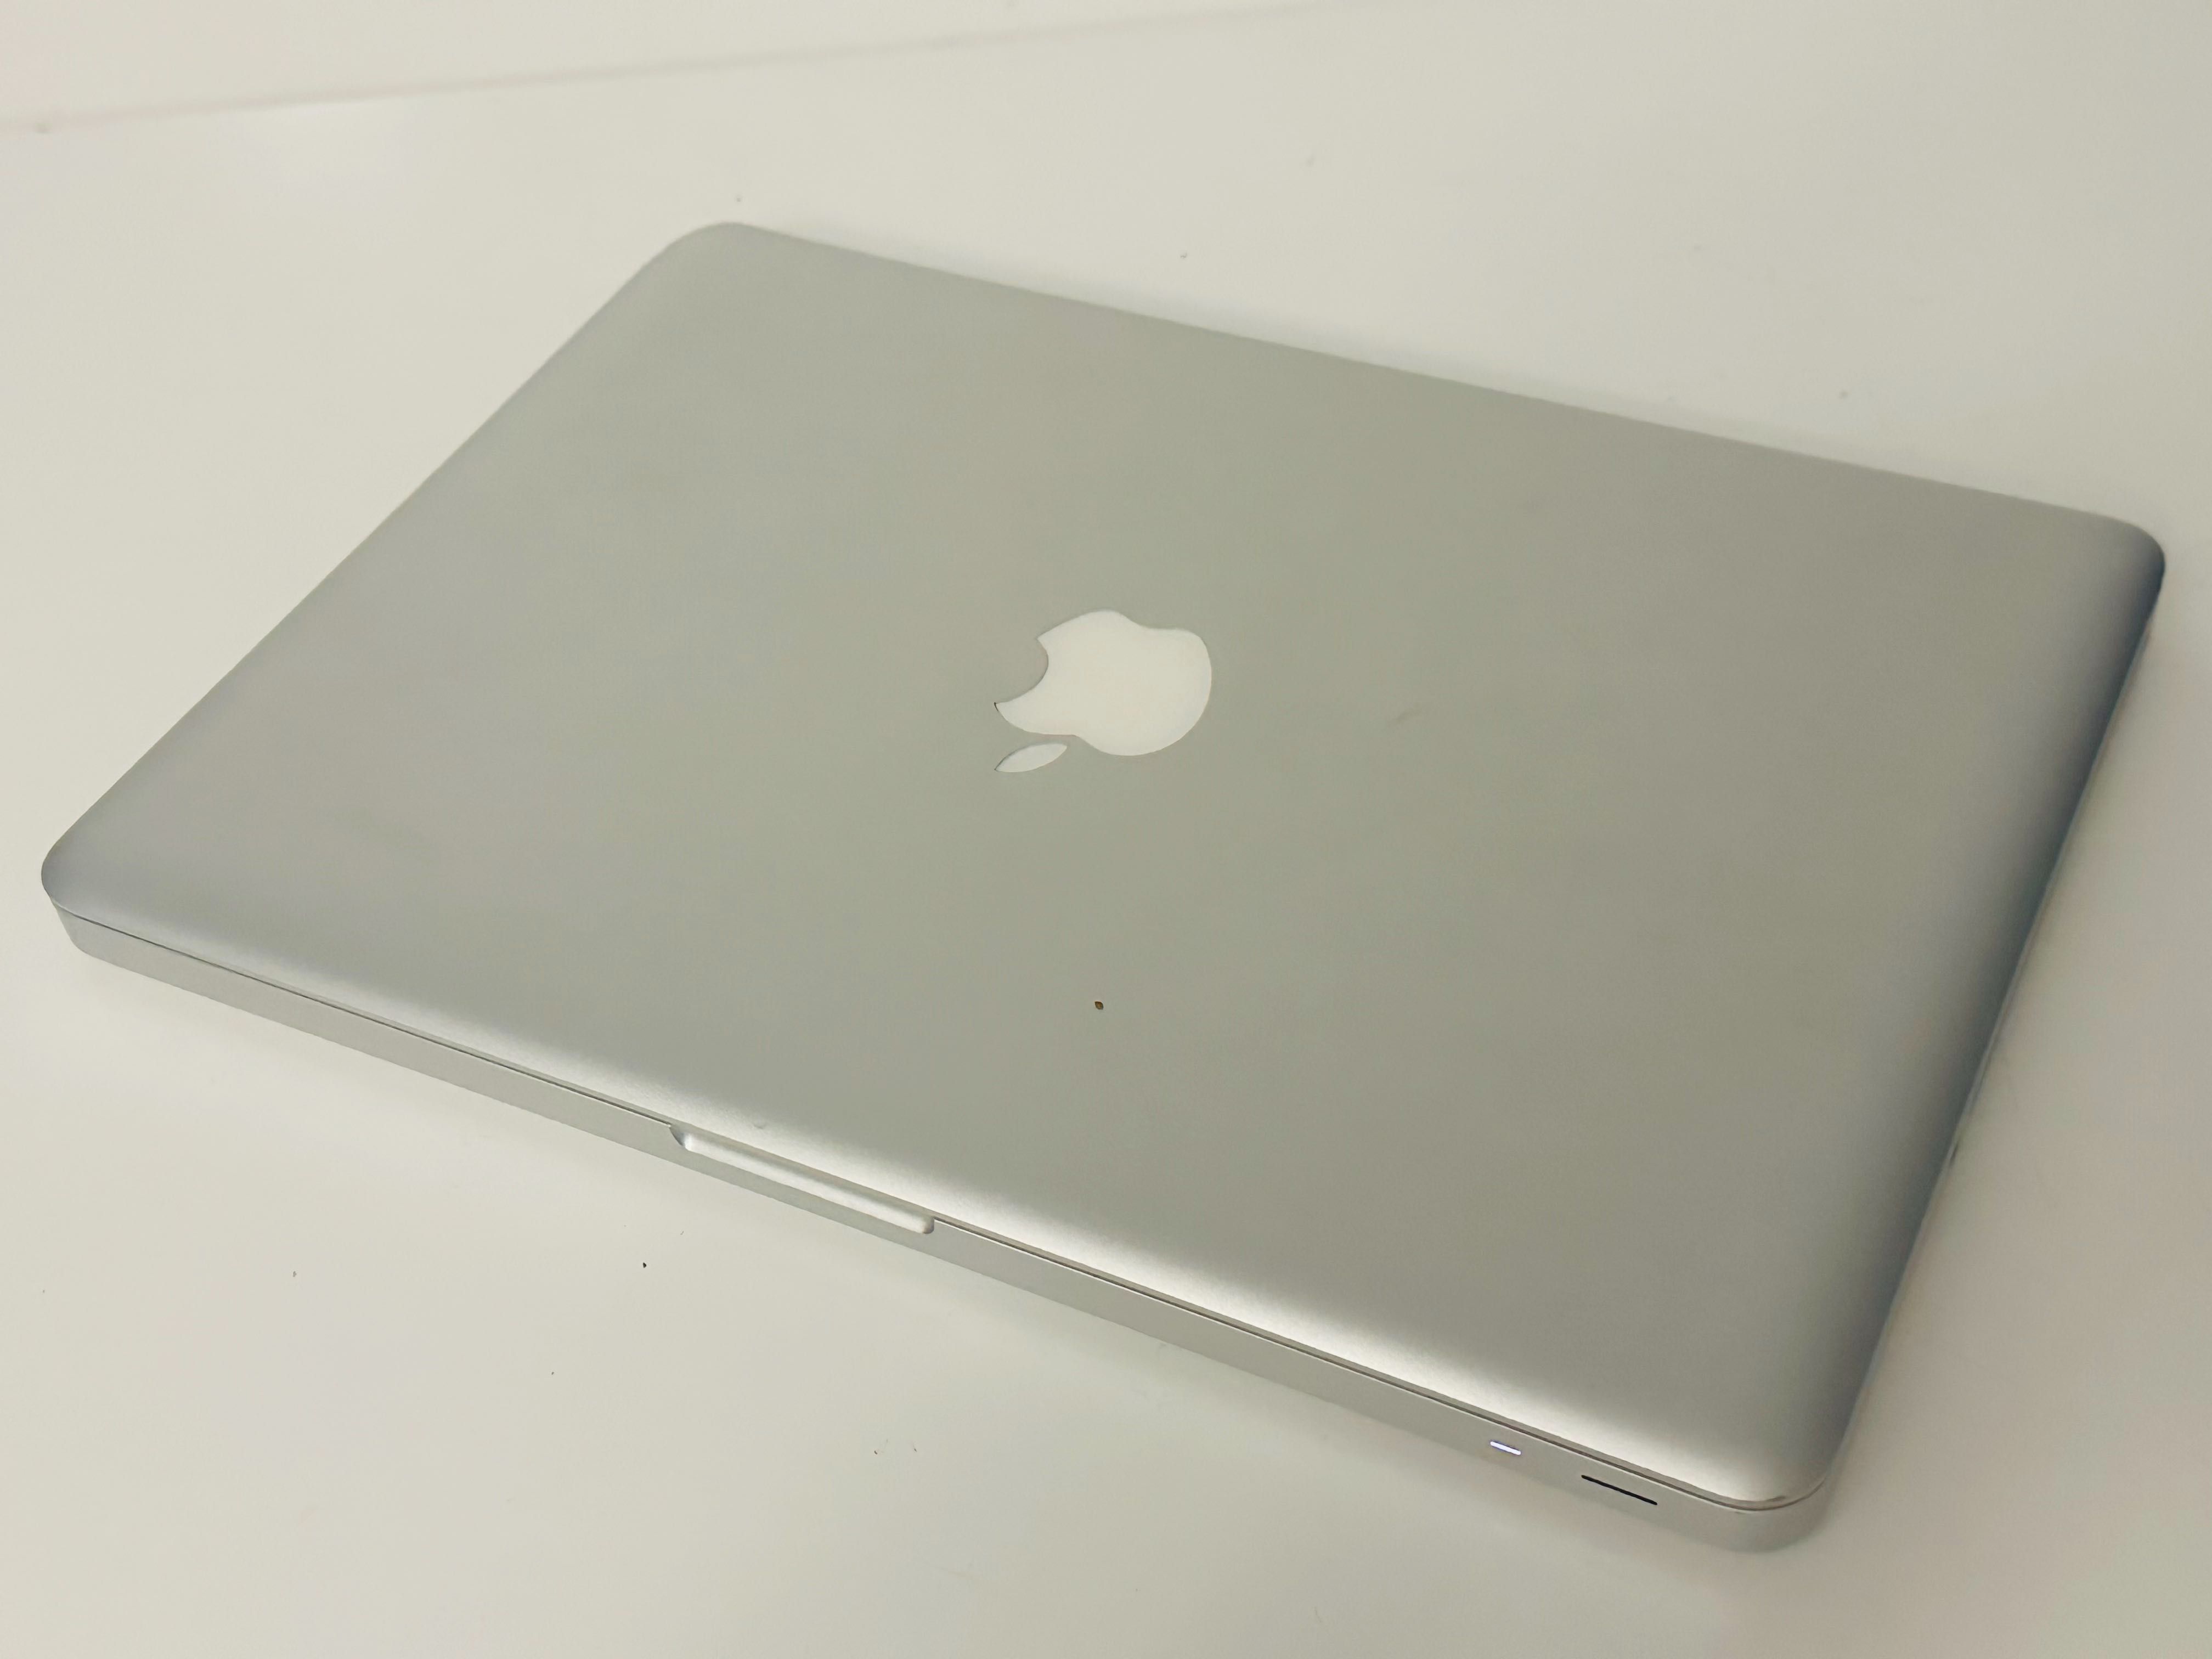 Apple MacBook Pro 13 2012 i5 4GB RAM 500GB HDD Silver